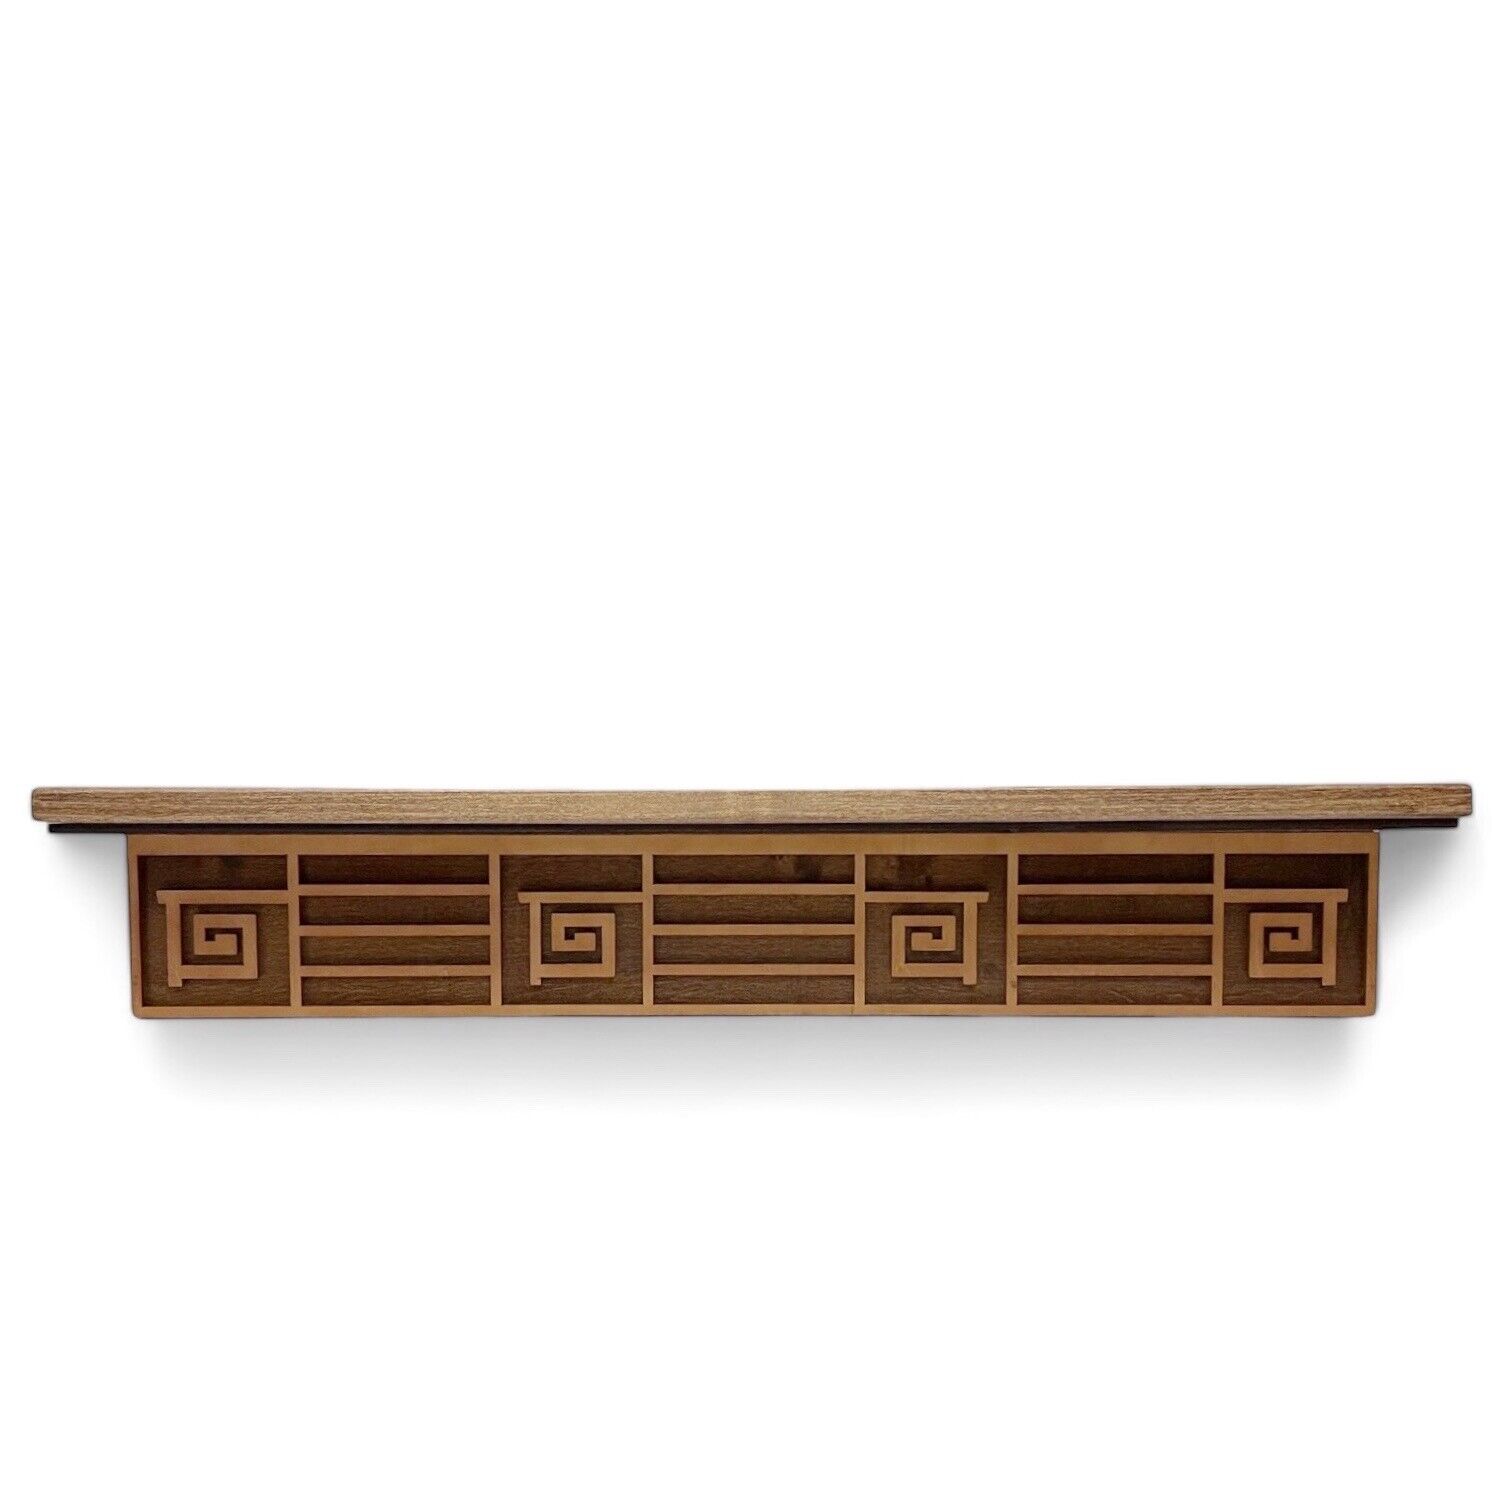 Frank Lloyd Wright VC Morris Greek Key Motif Wood Wall Shelf 31